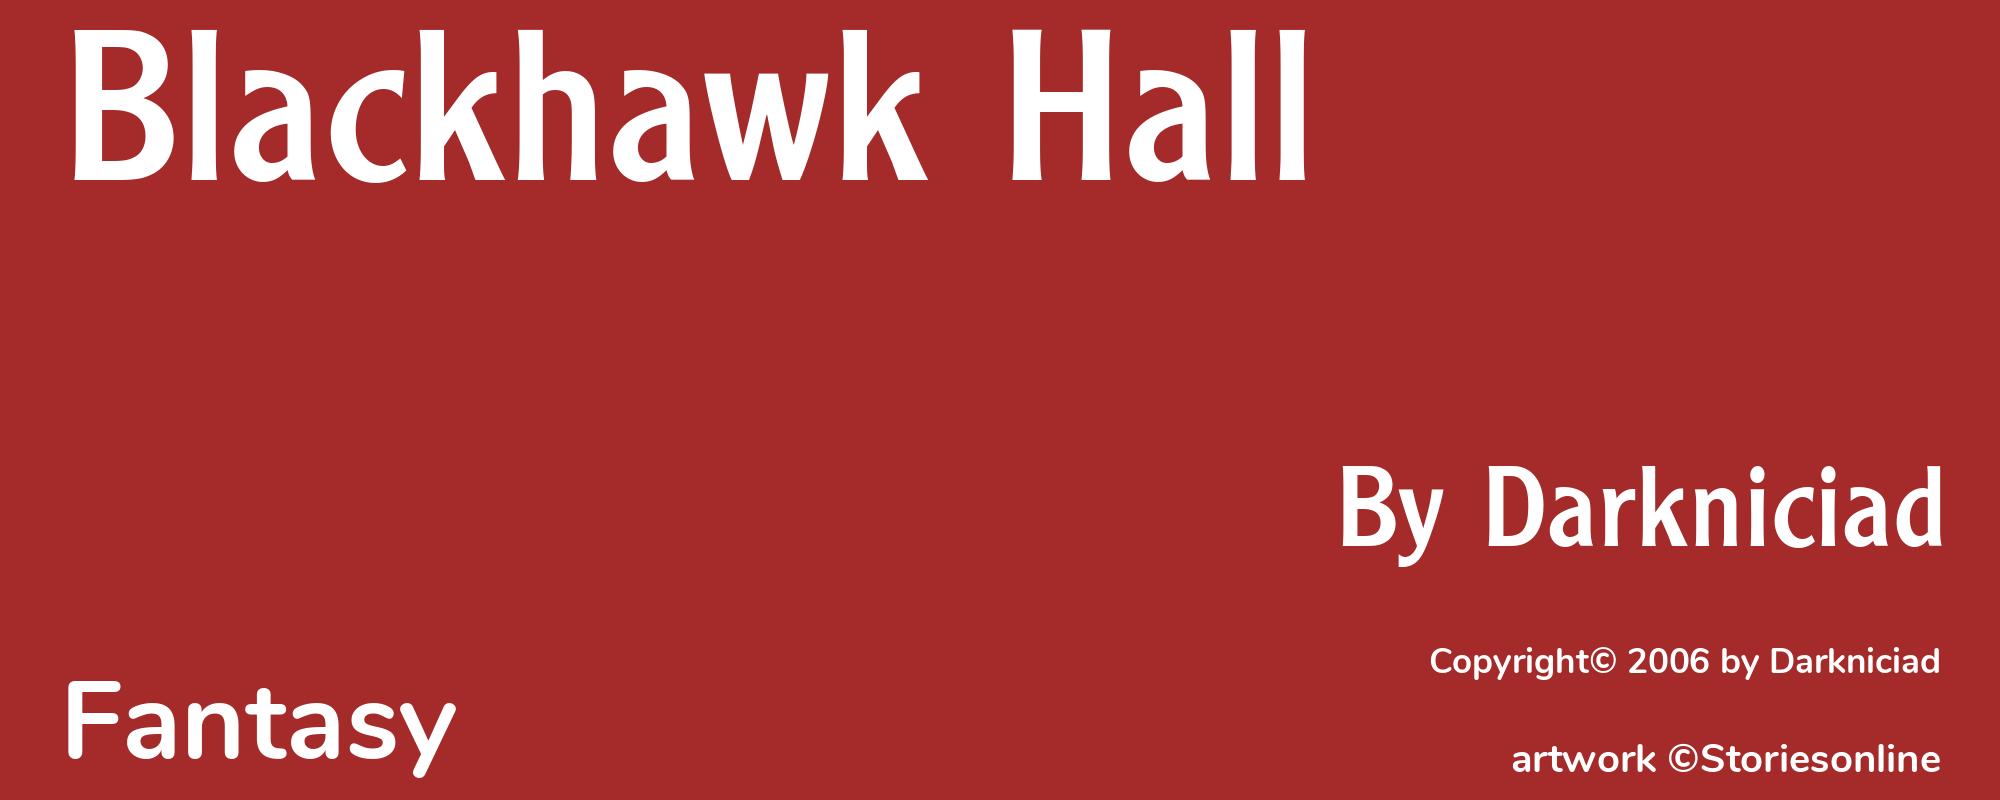 Blackhawk Hall - Cover